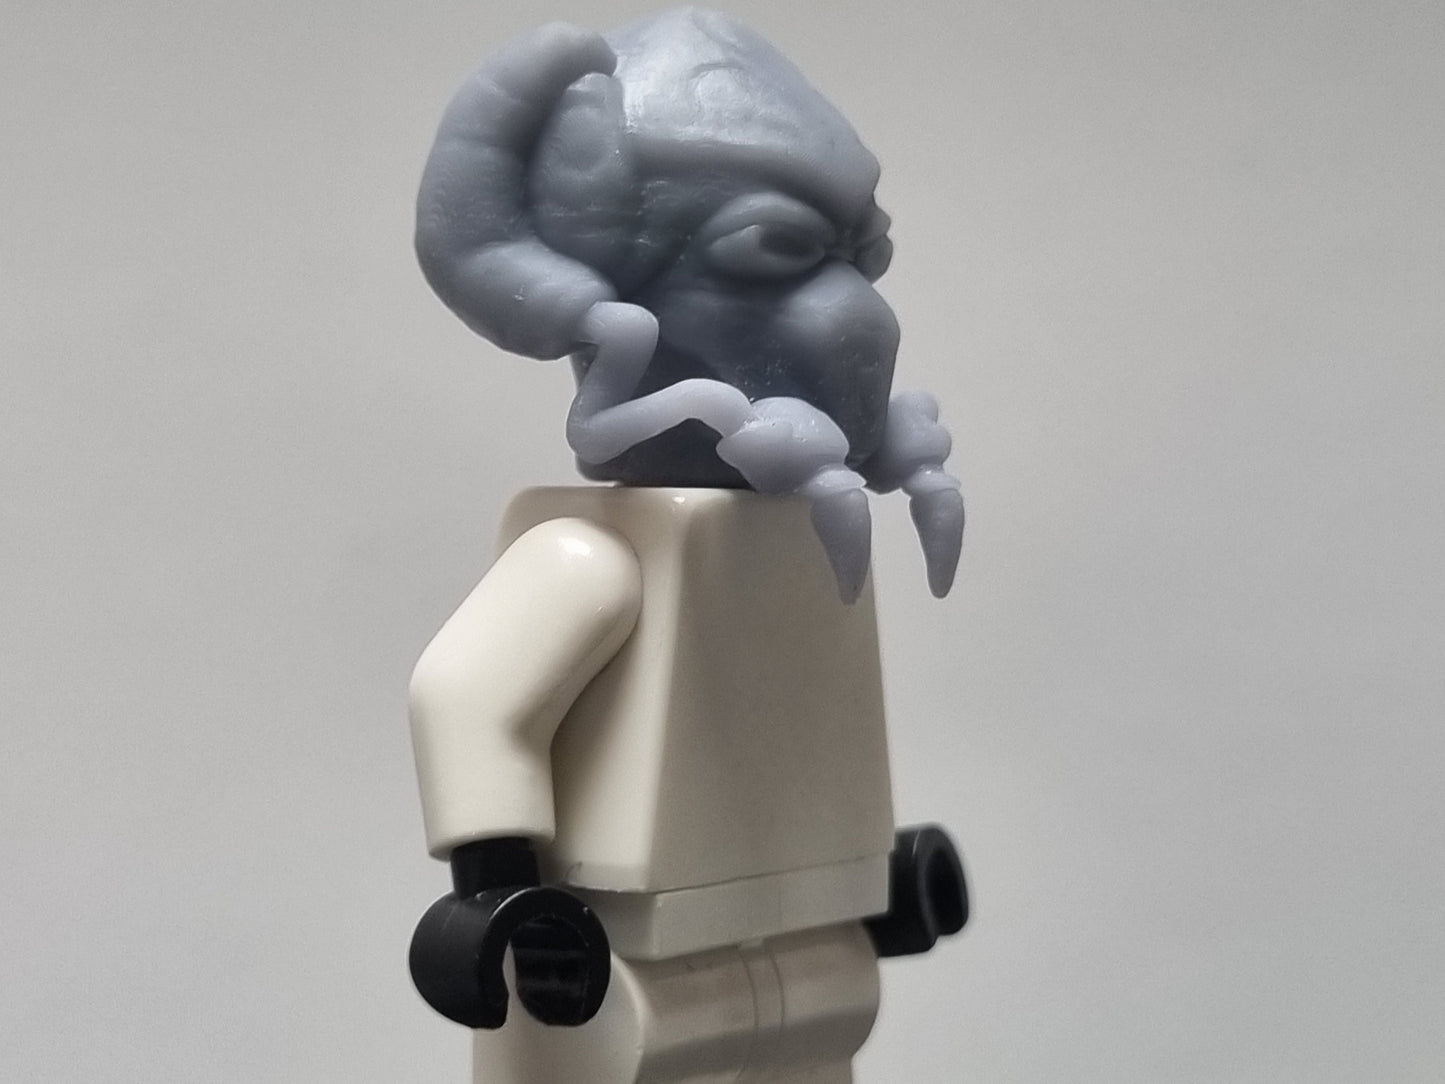 Building toy custom 3D printed galaxy wars alien head!